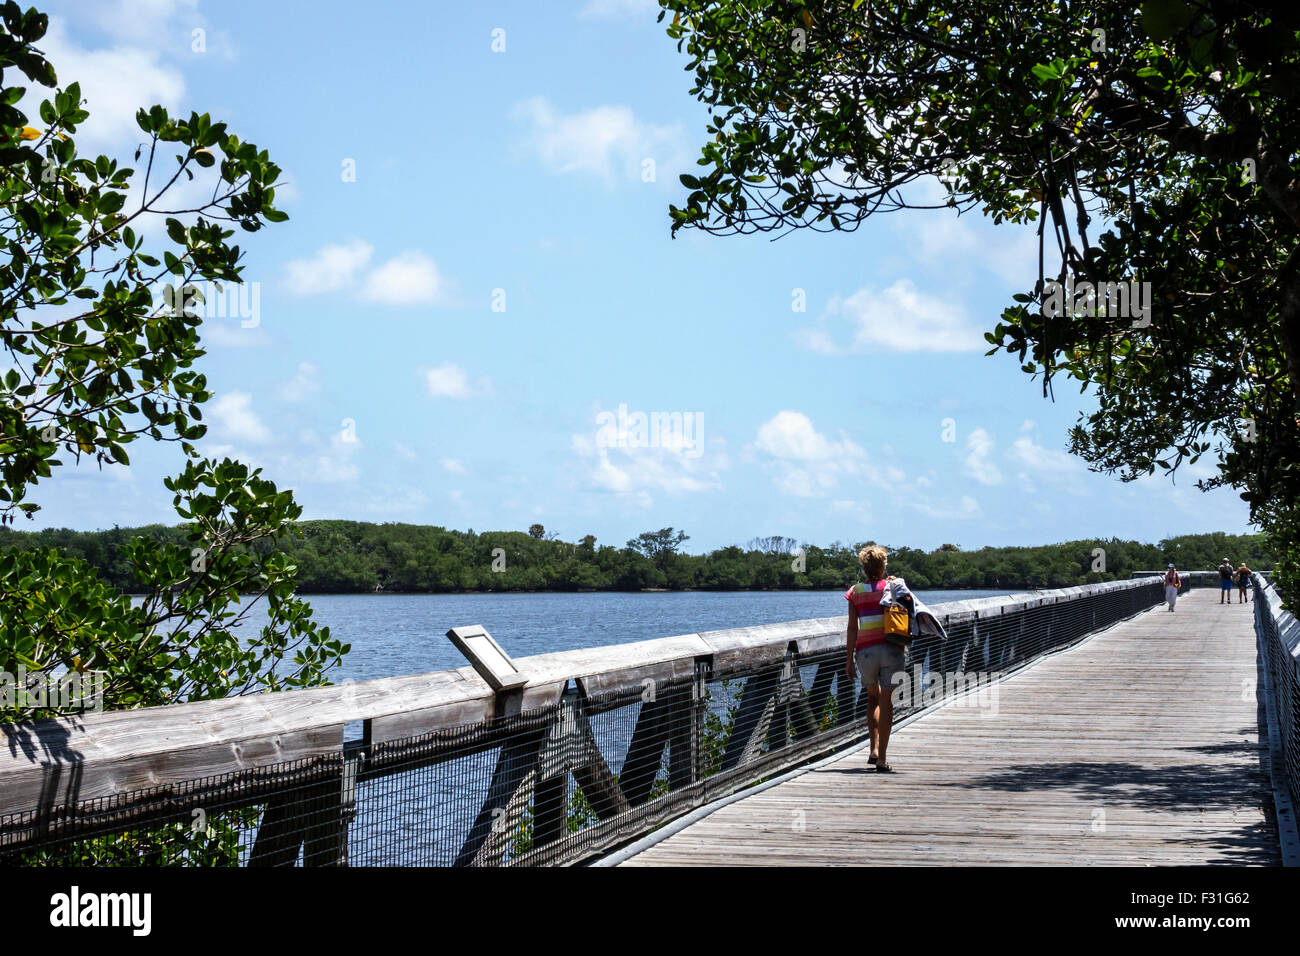 Florida North Palm Beach, John D. MacArthur Beach state Park, Lake Worth Lagoon, passeggiata in mezzo alla natura, adulti, donna donna donna donna donna donna donna donna donna, passeggiate, vista Foto Stock